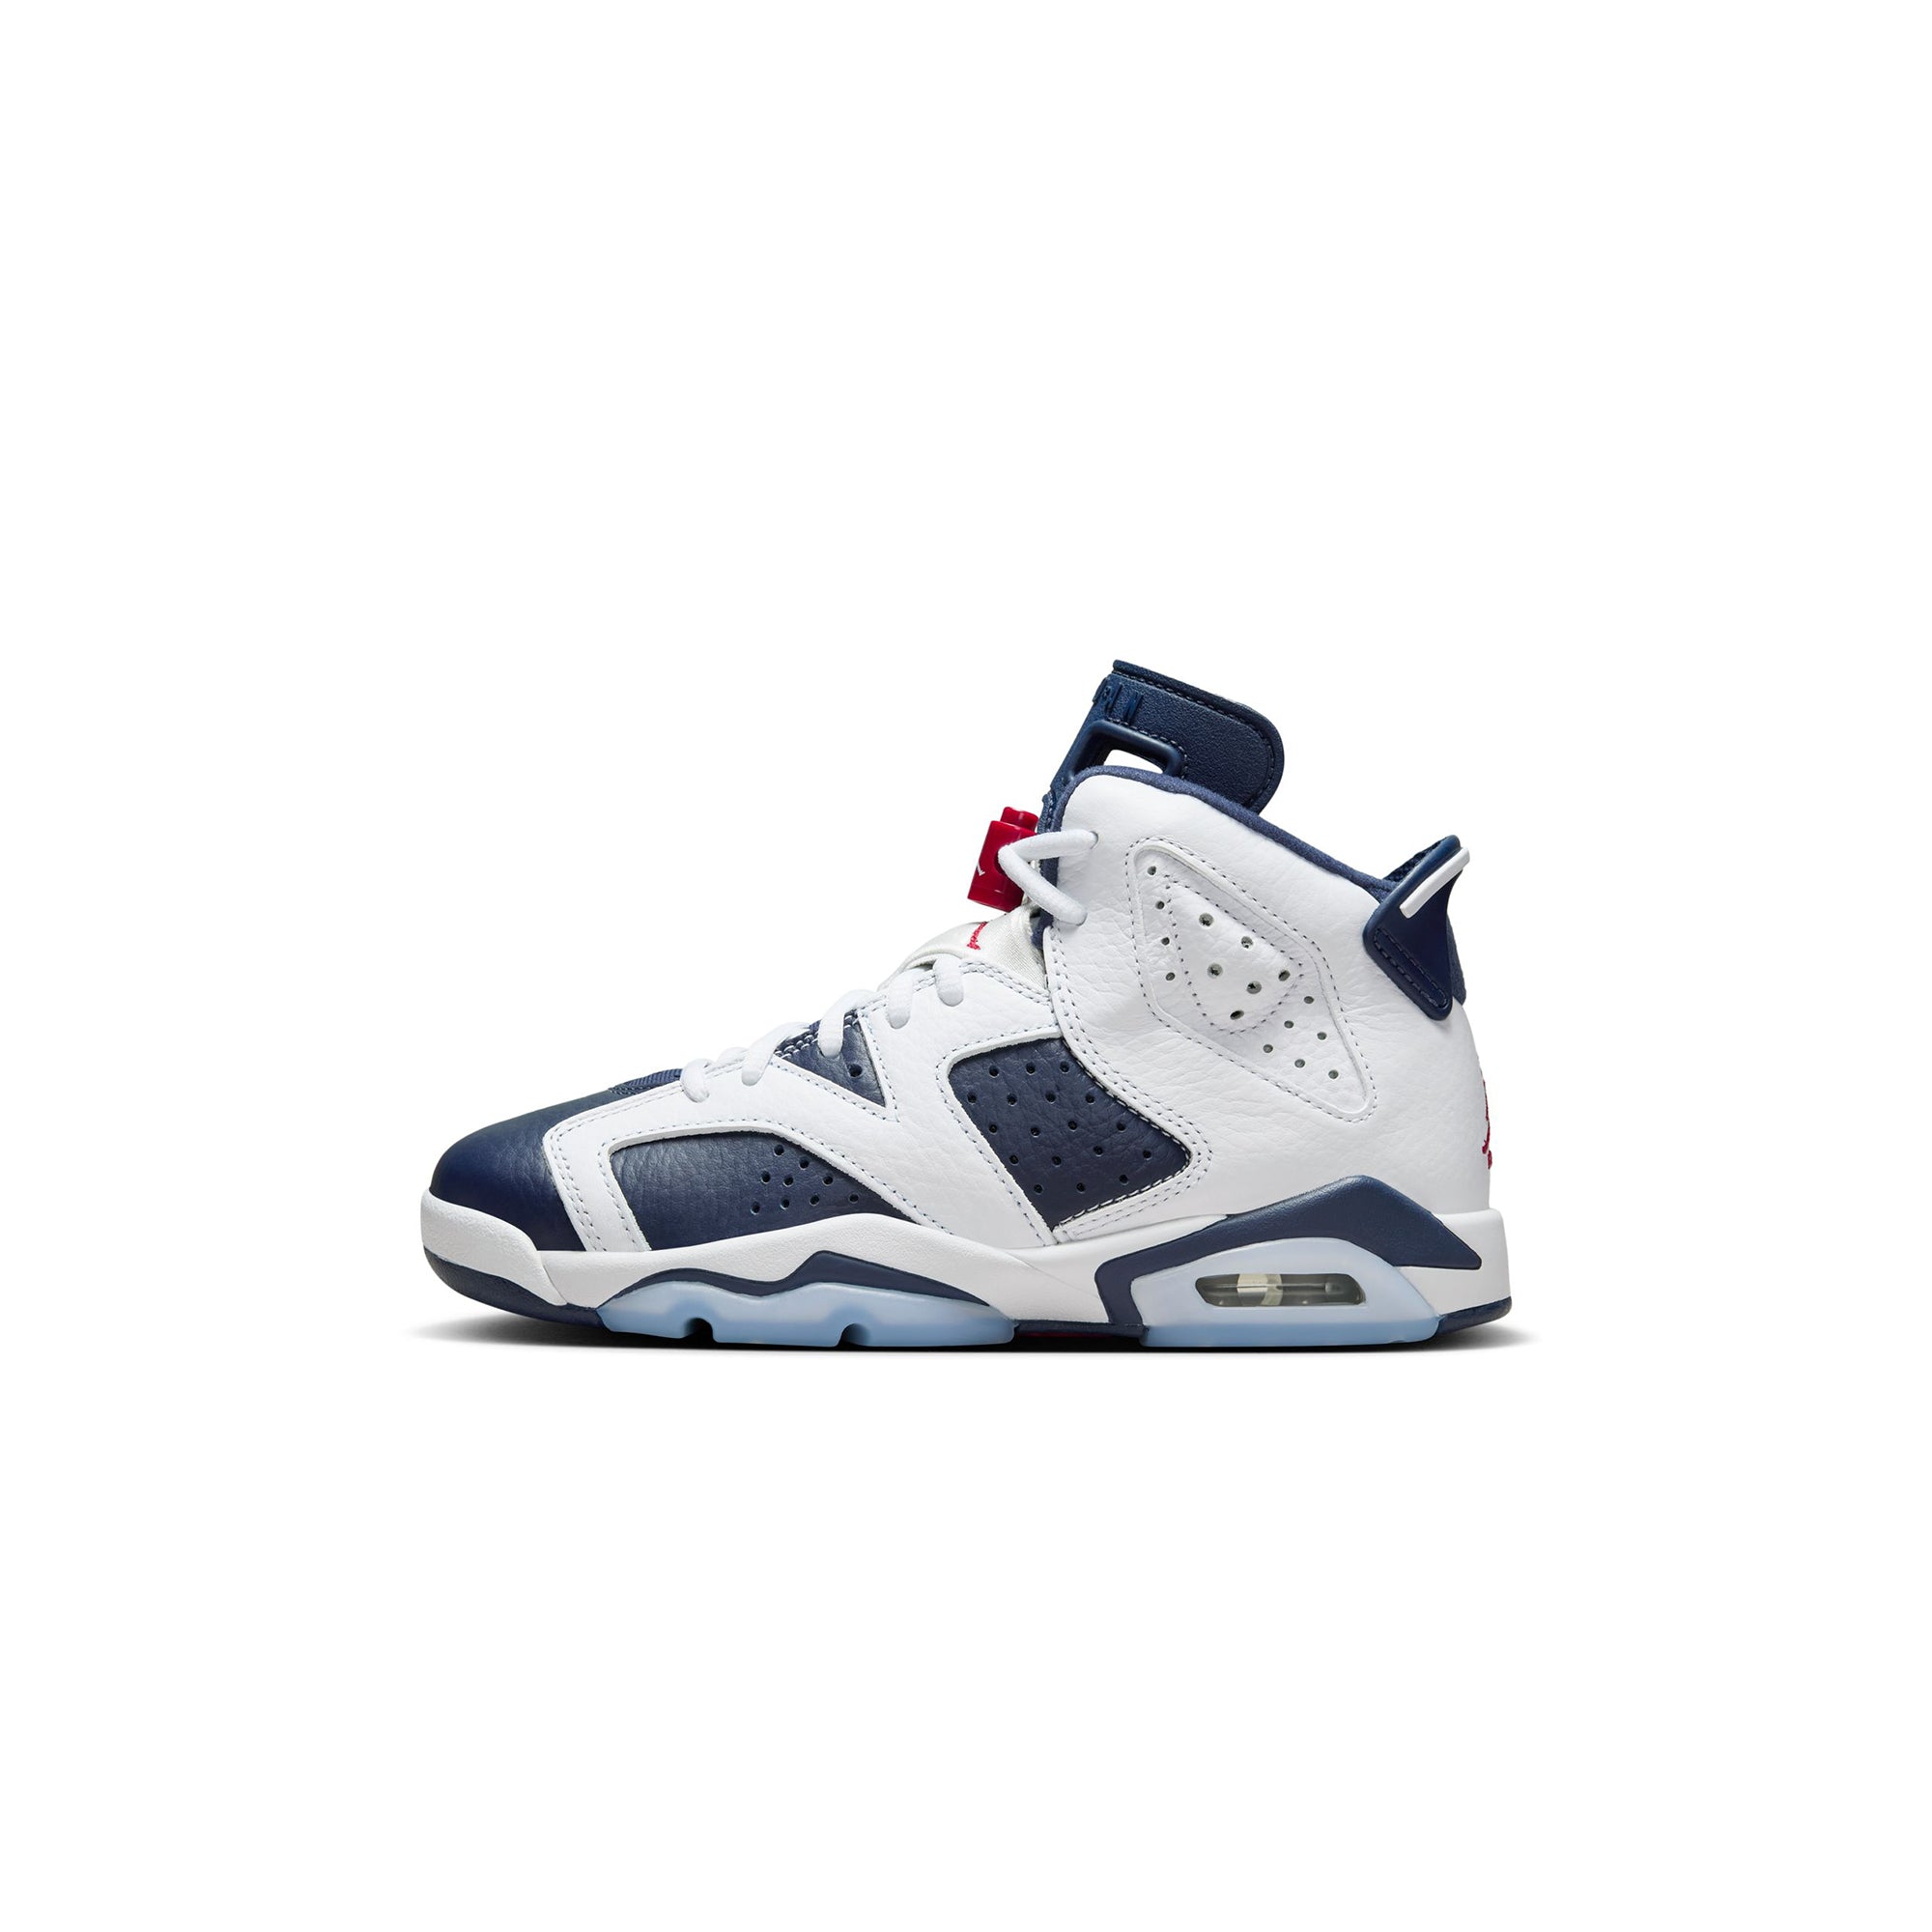 Air Jordan 6 Kids Retro "Olympic" Shoes card image